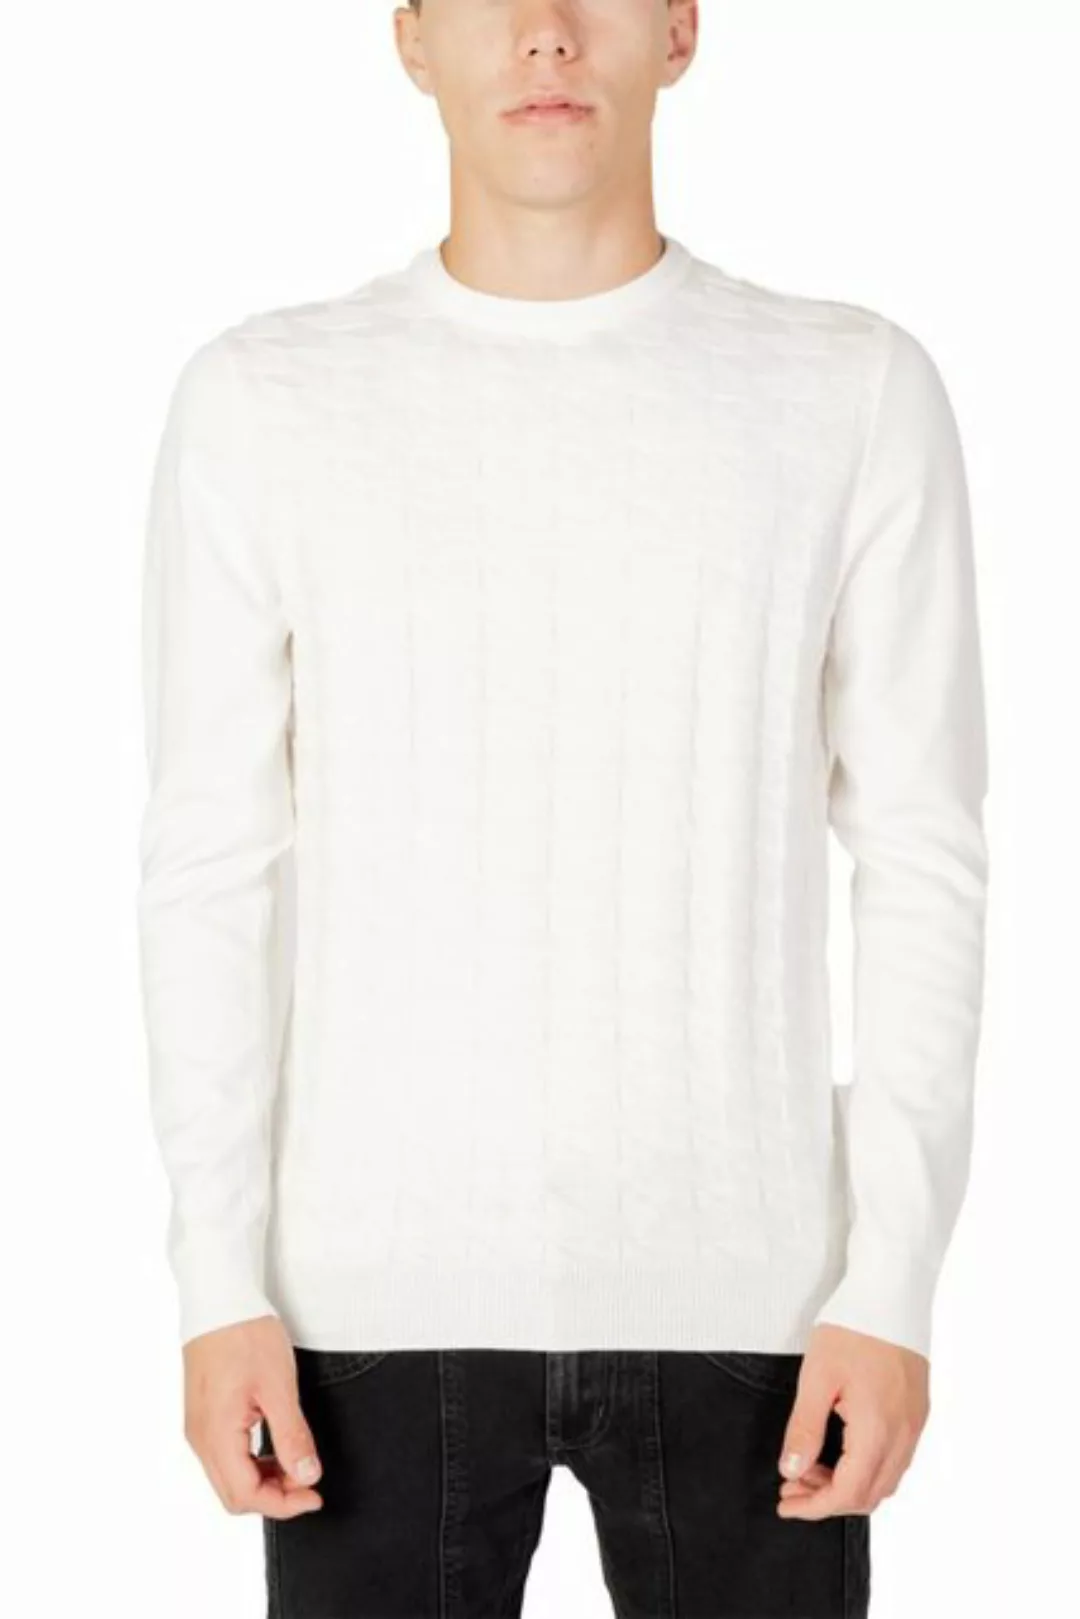 Antony morato Sweatshirt günstig online kaufen